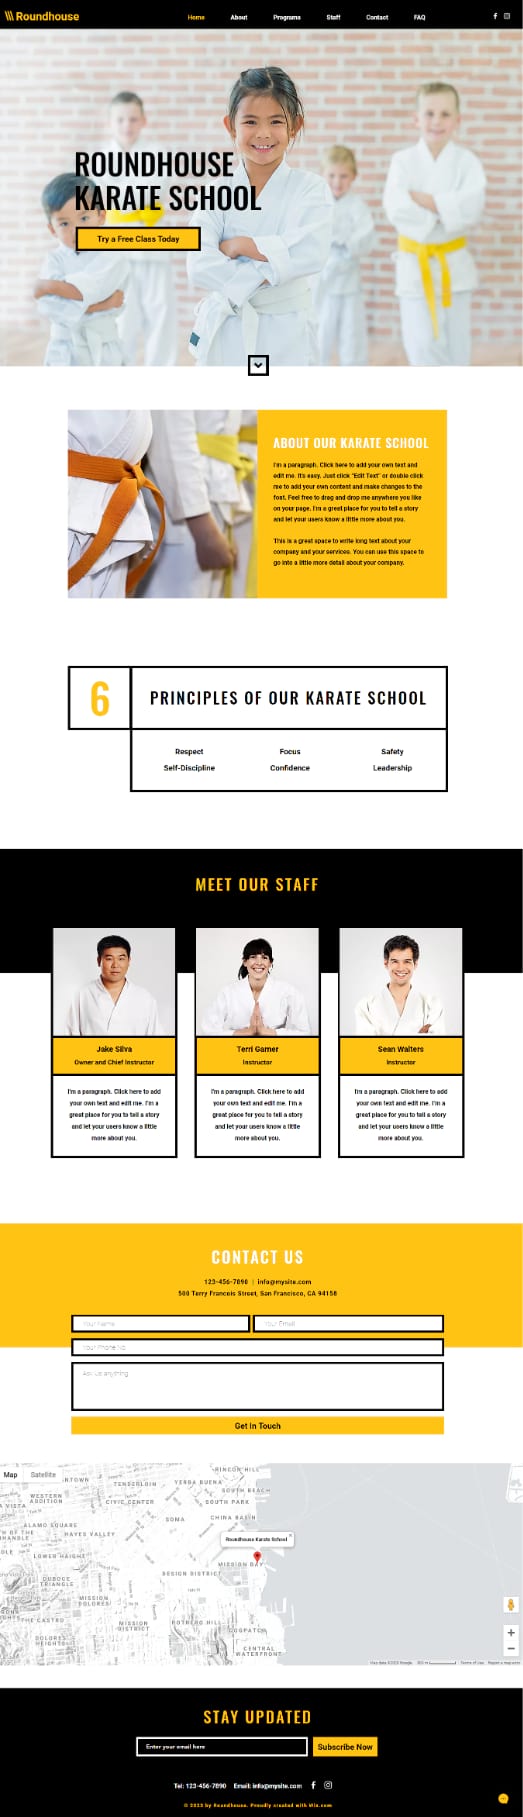 karate school website template